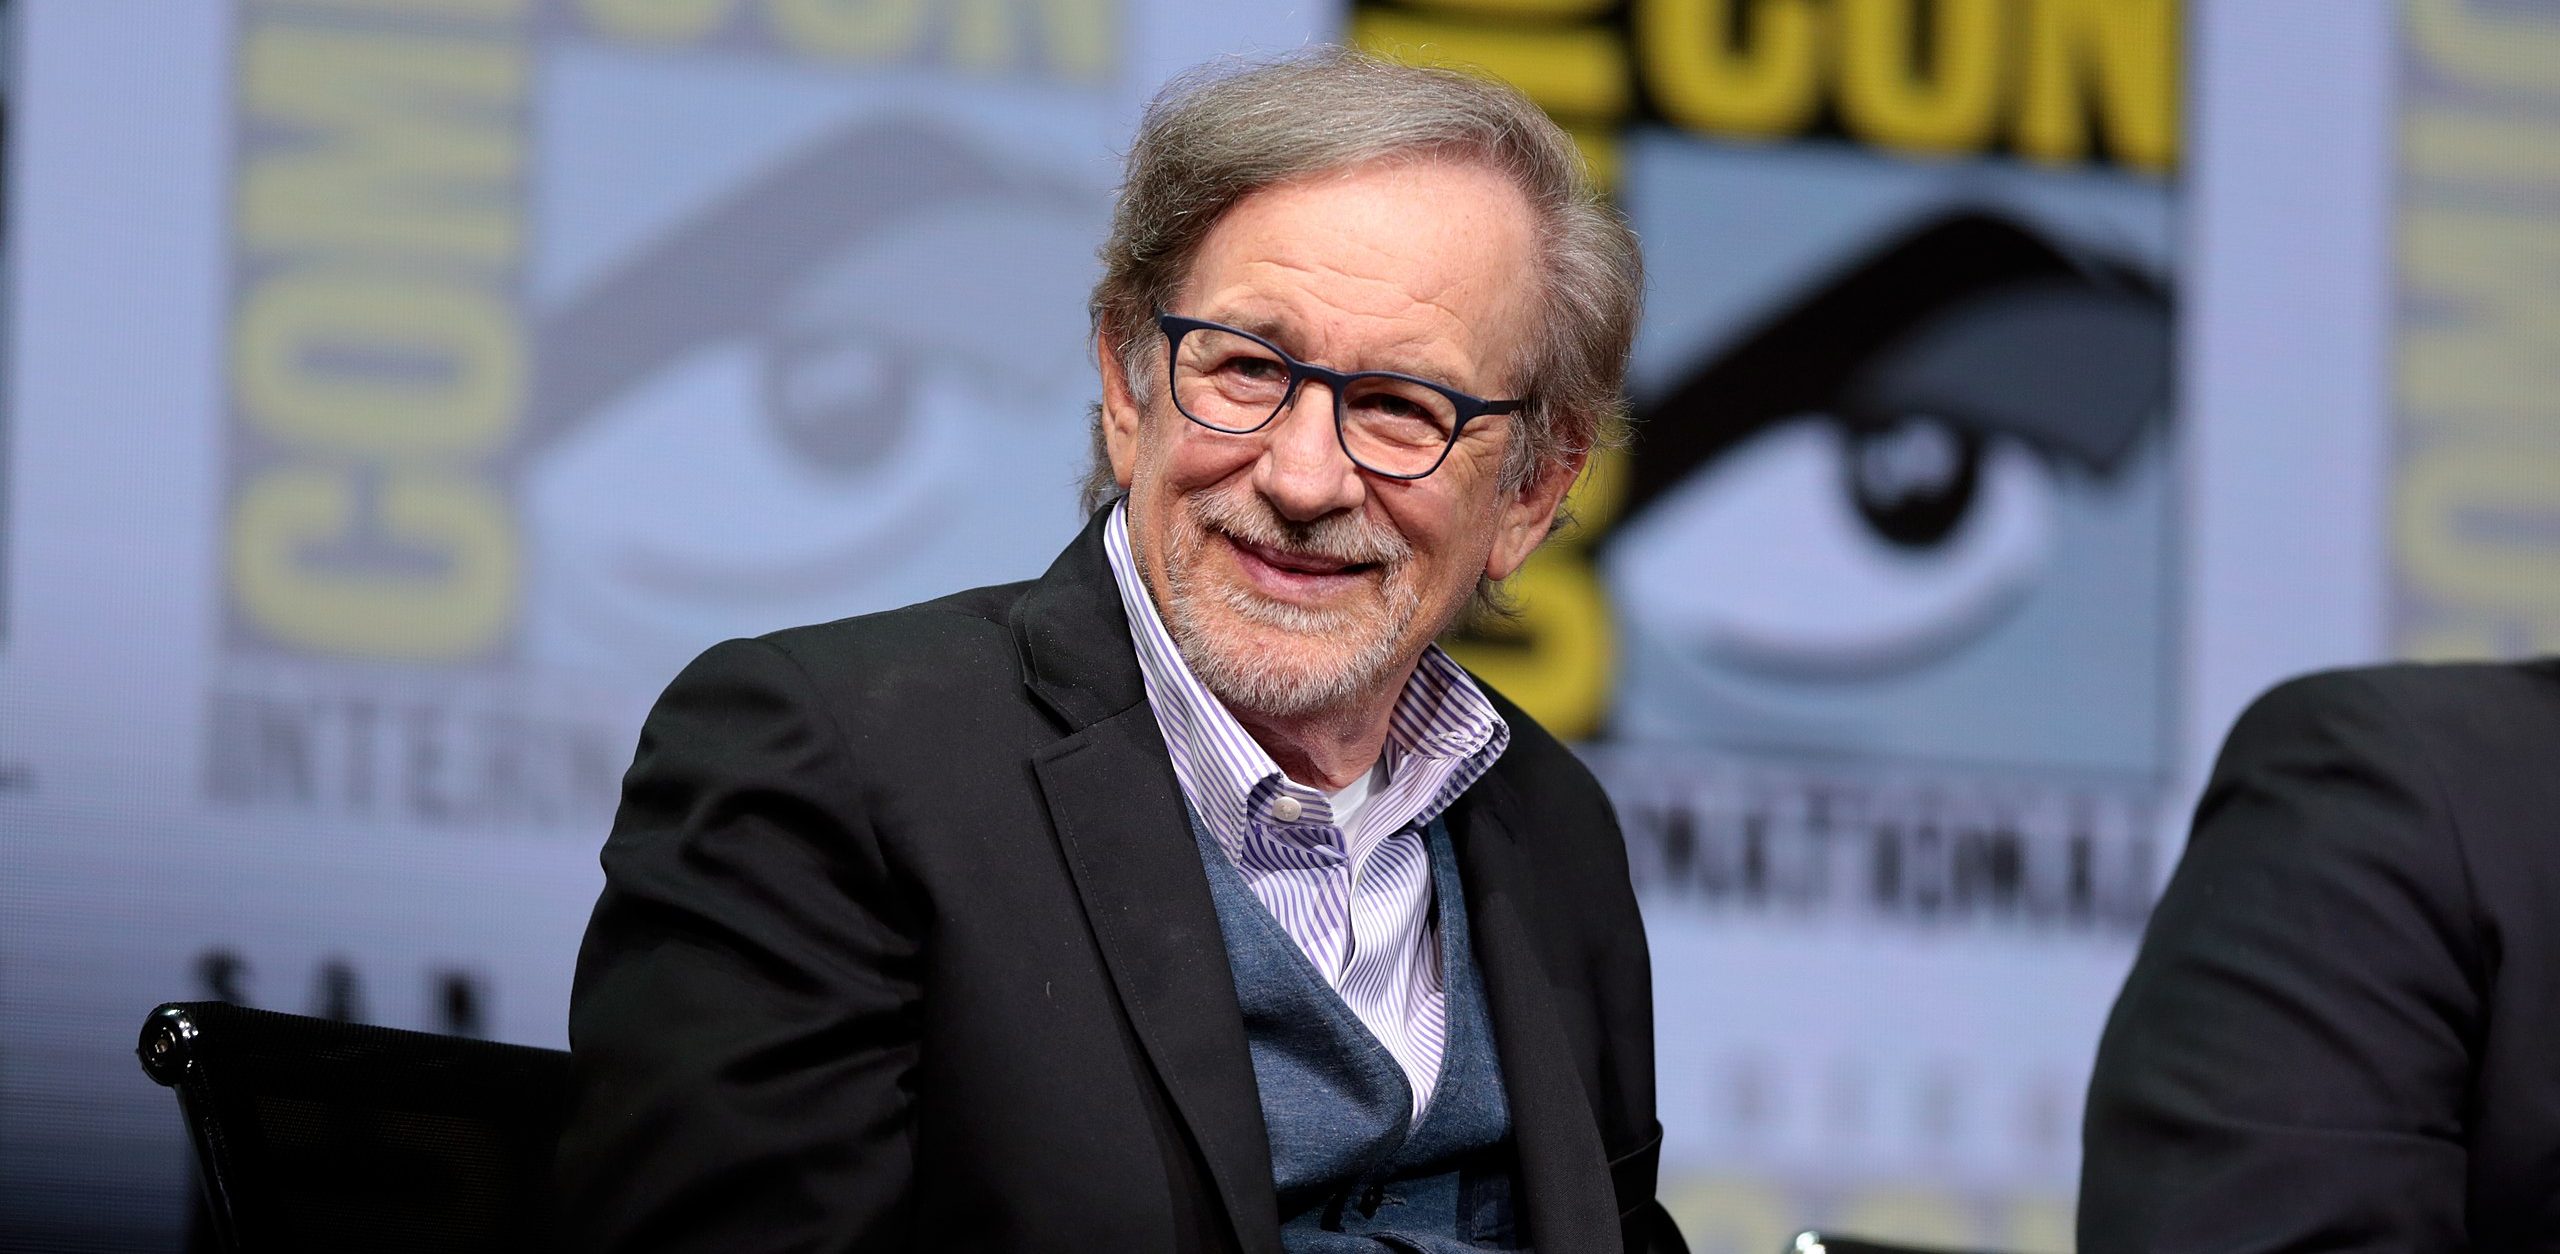 Did Steven Spielberg Meet John Ford in Real Life?